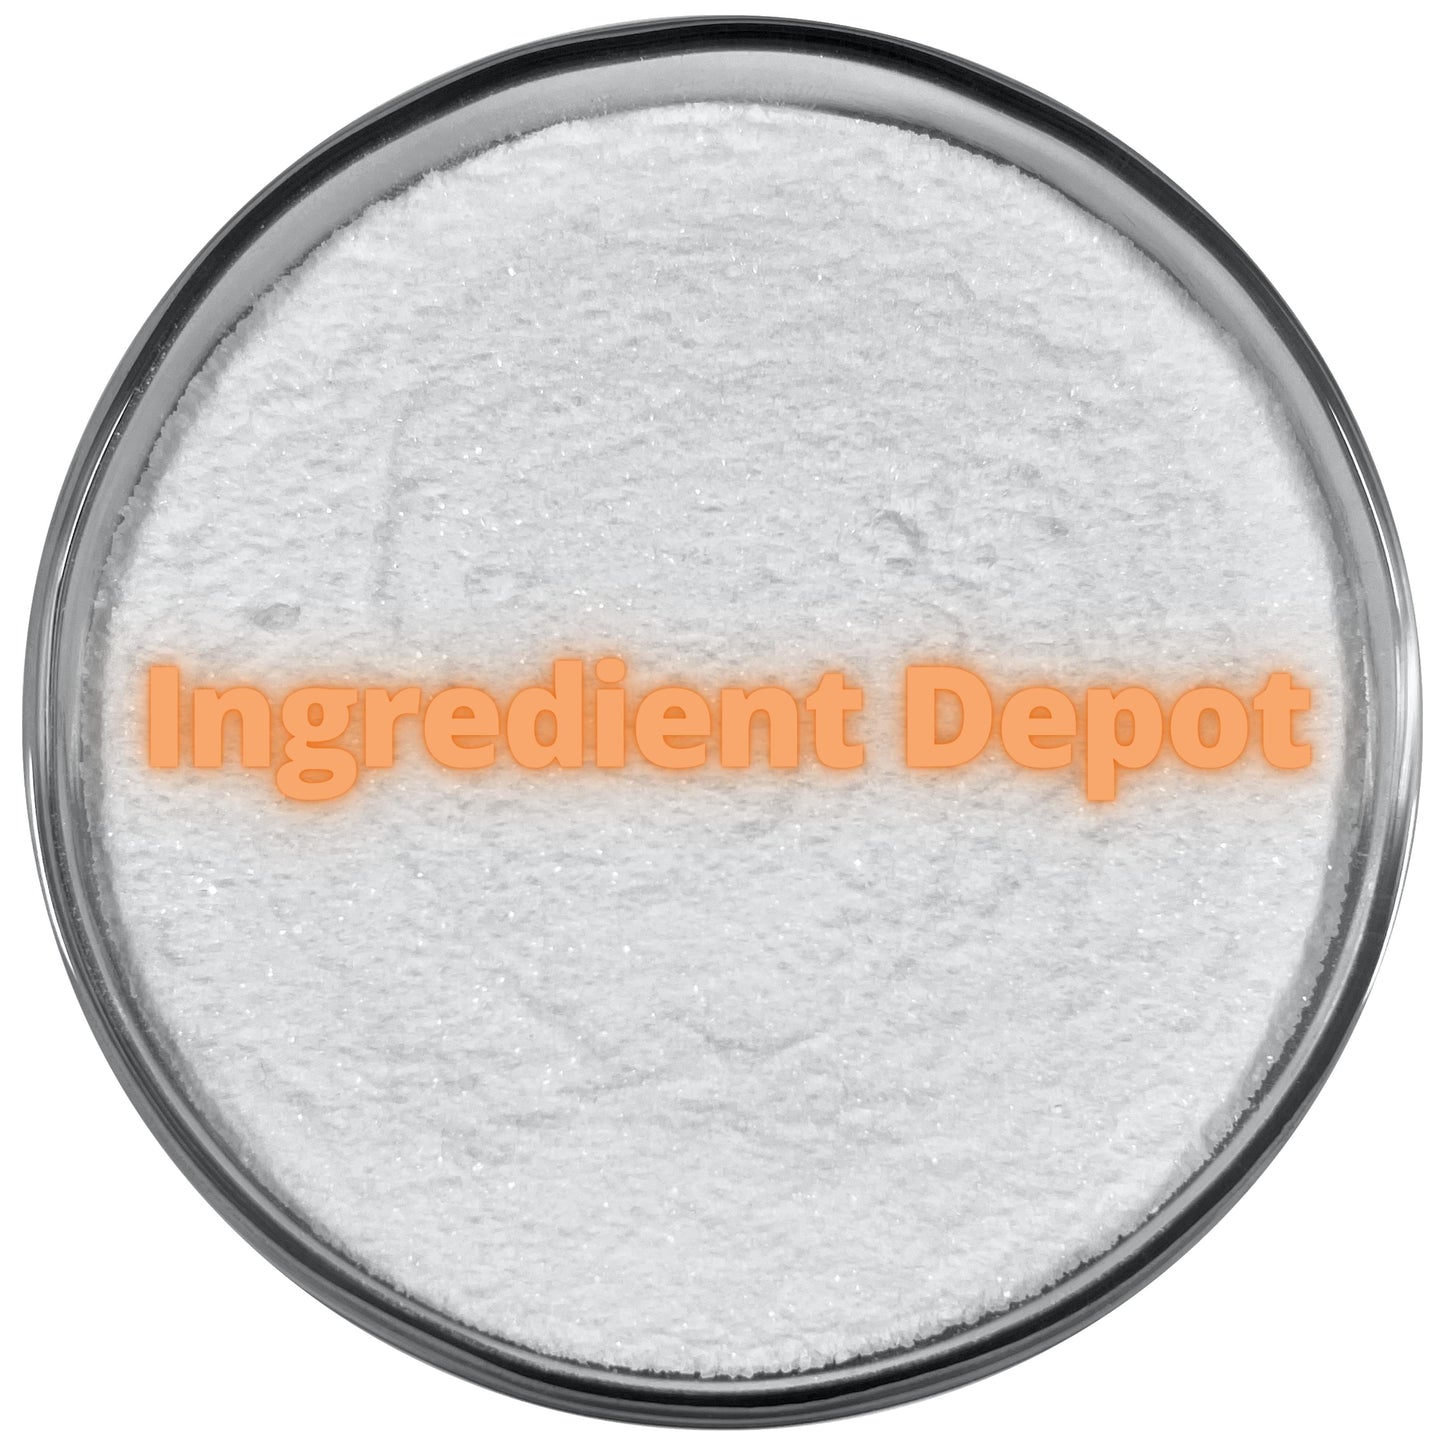 Ascorbic Acid (Vitamin C), Food and USP Grade 12 kgs - IngredientDepot.com